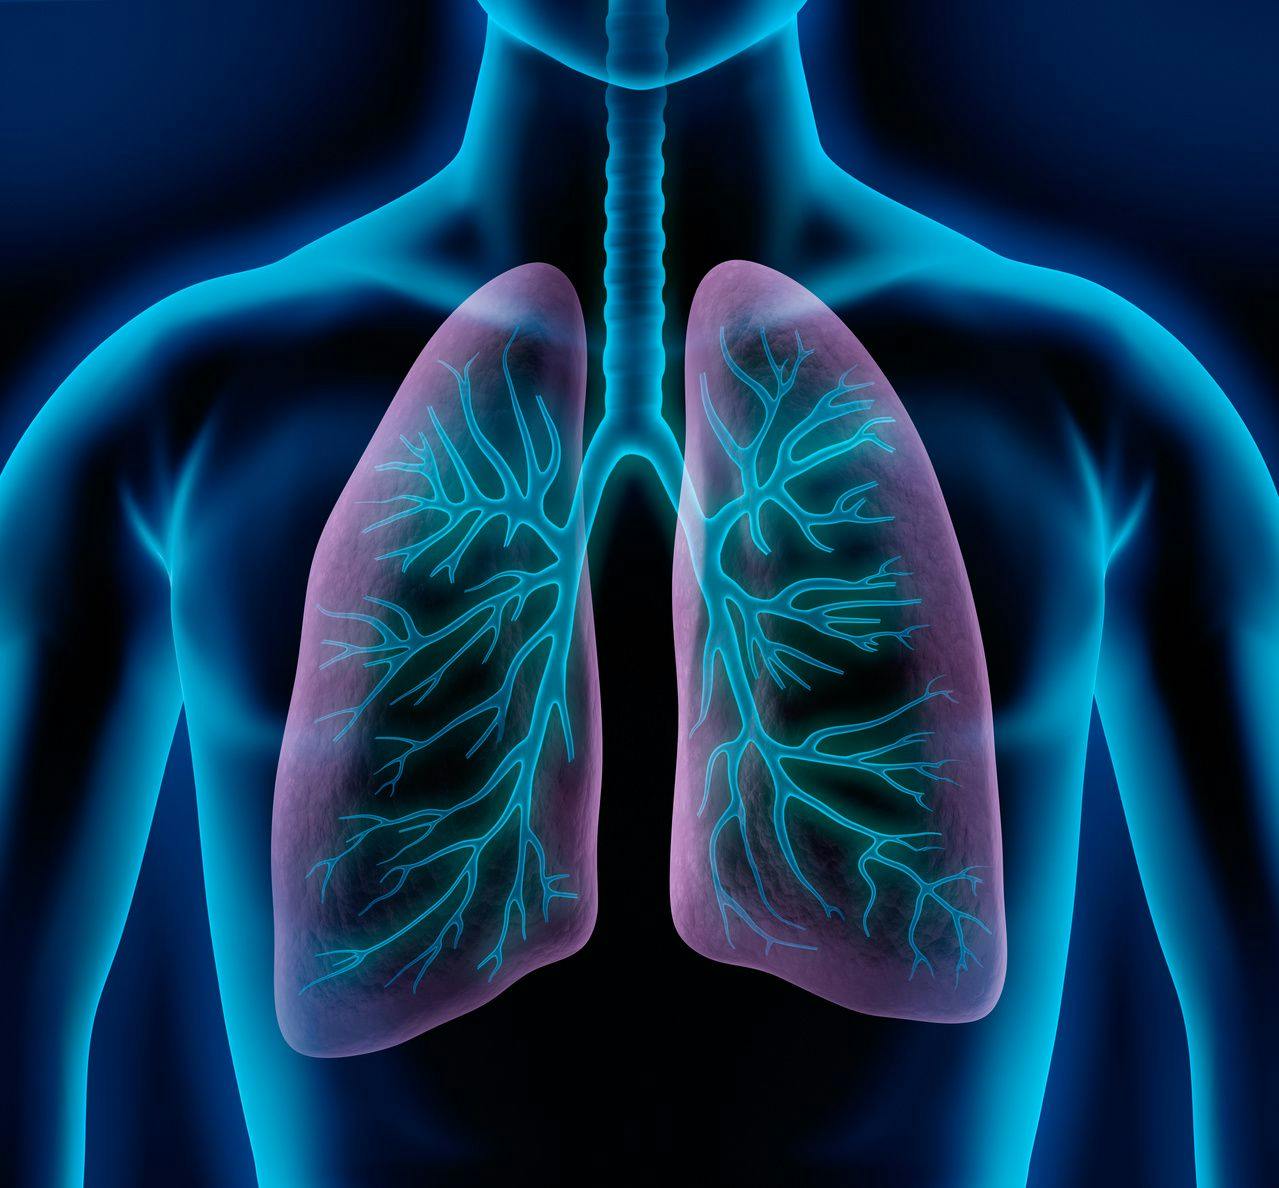 Understanding Early Predictors of Mortality in COPD